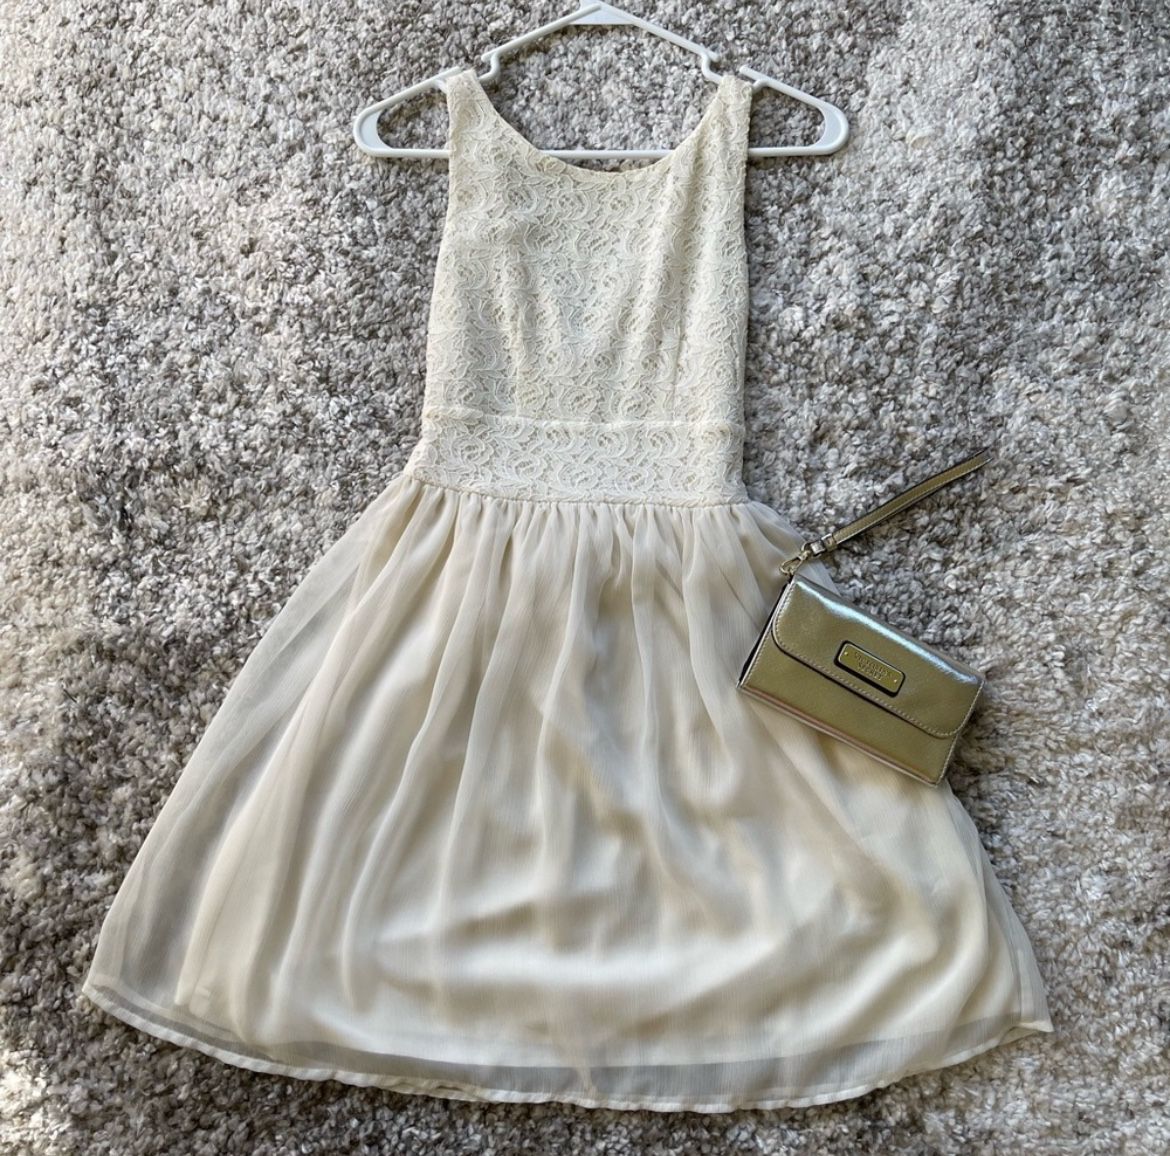 Delia’s dress